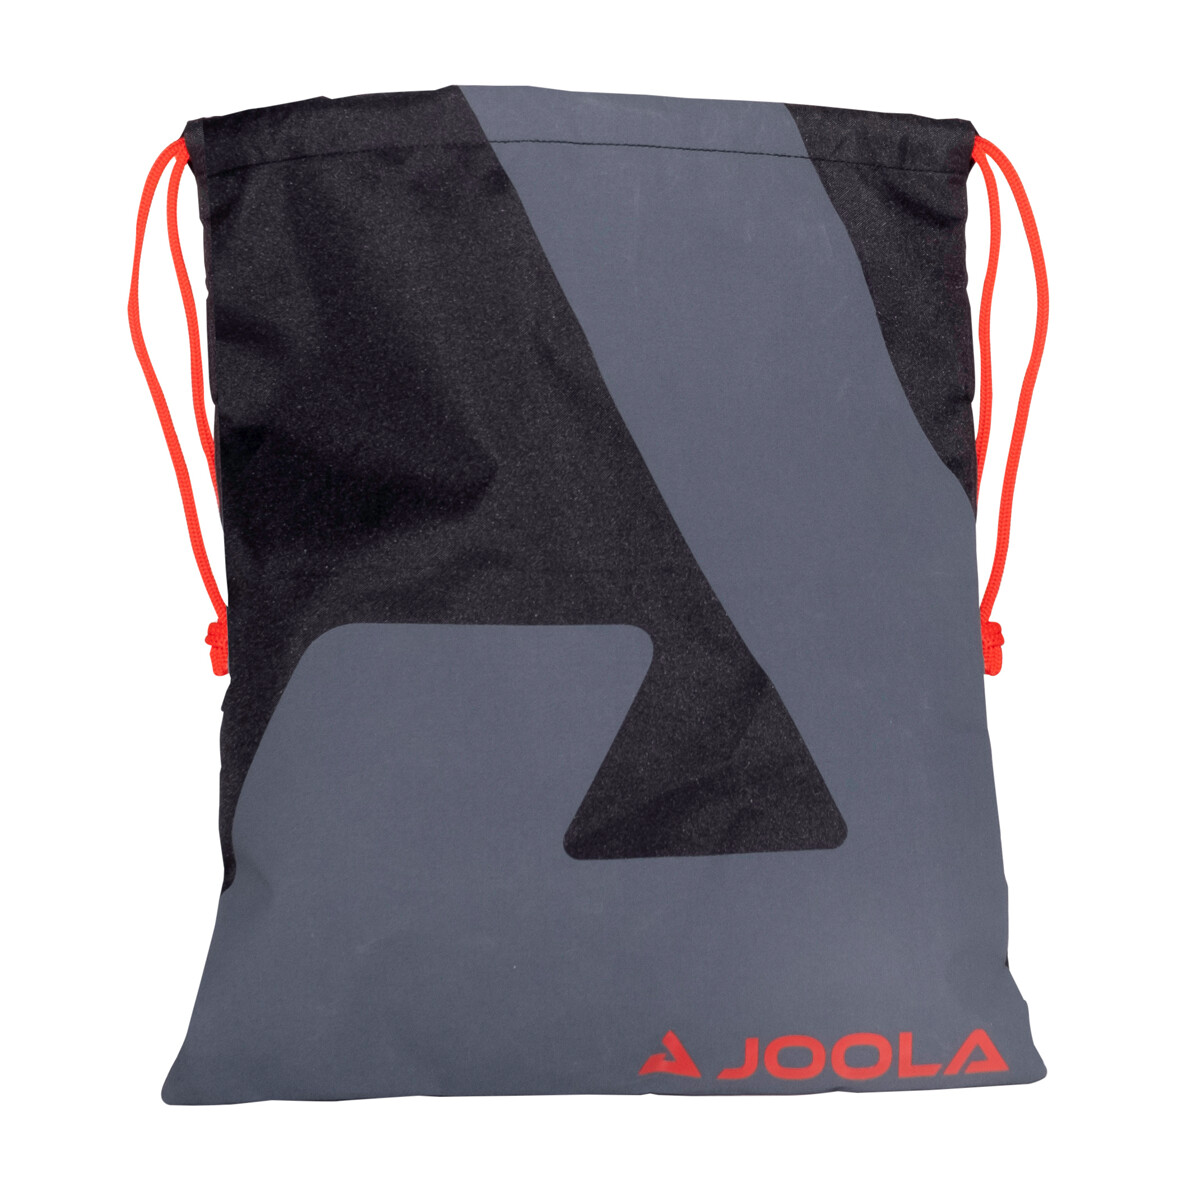 JOOLA Vision Shoe Bag